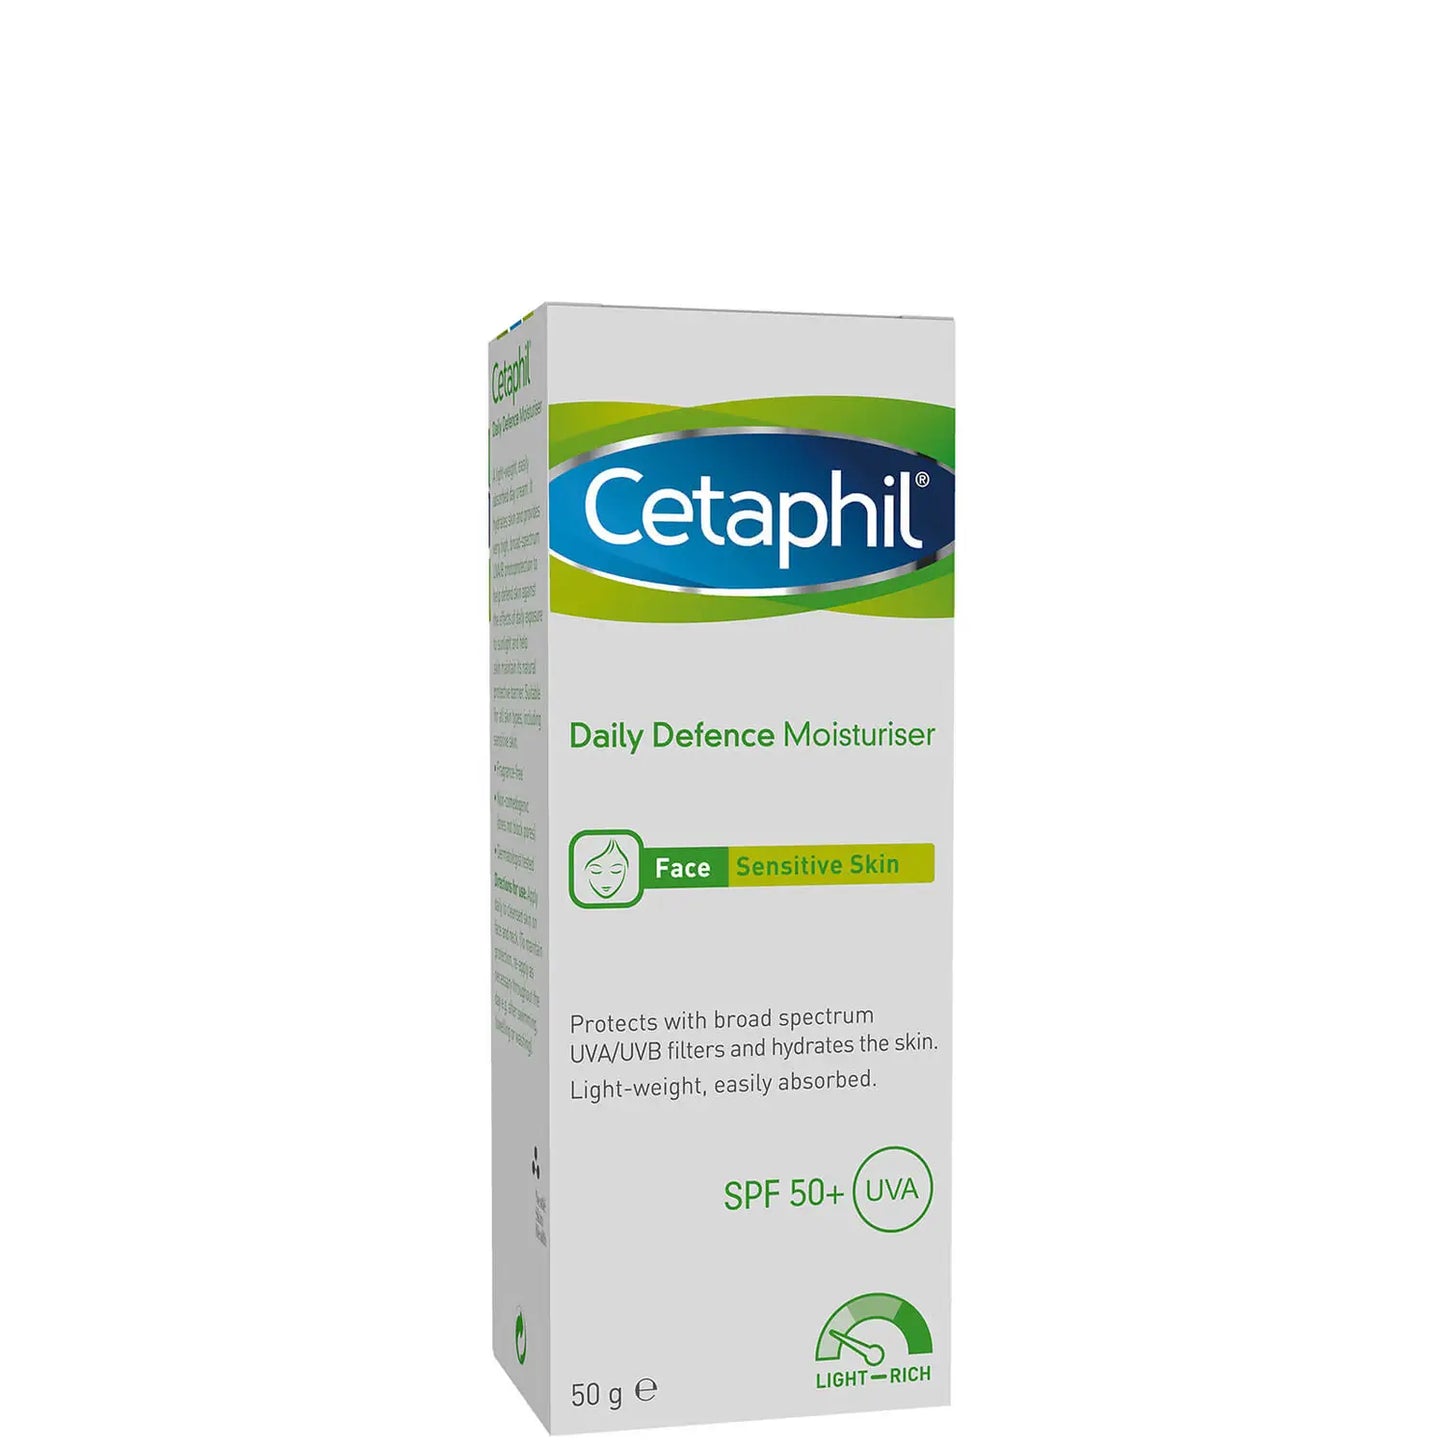 Cetaphil 日常防御保湿霜 SPF50+ 50g